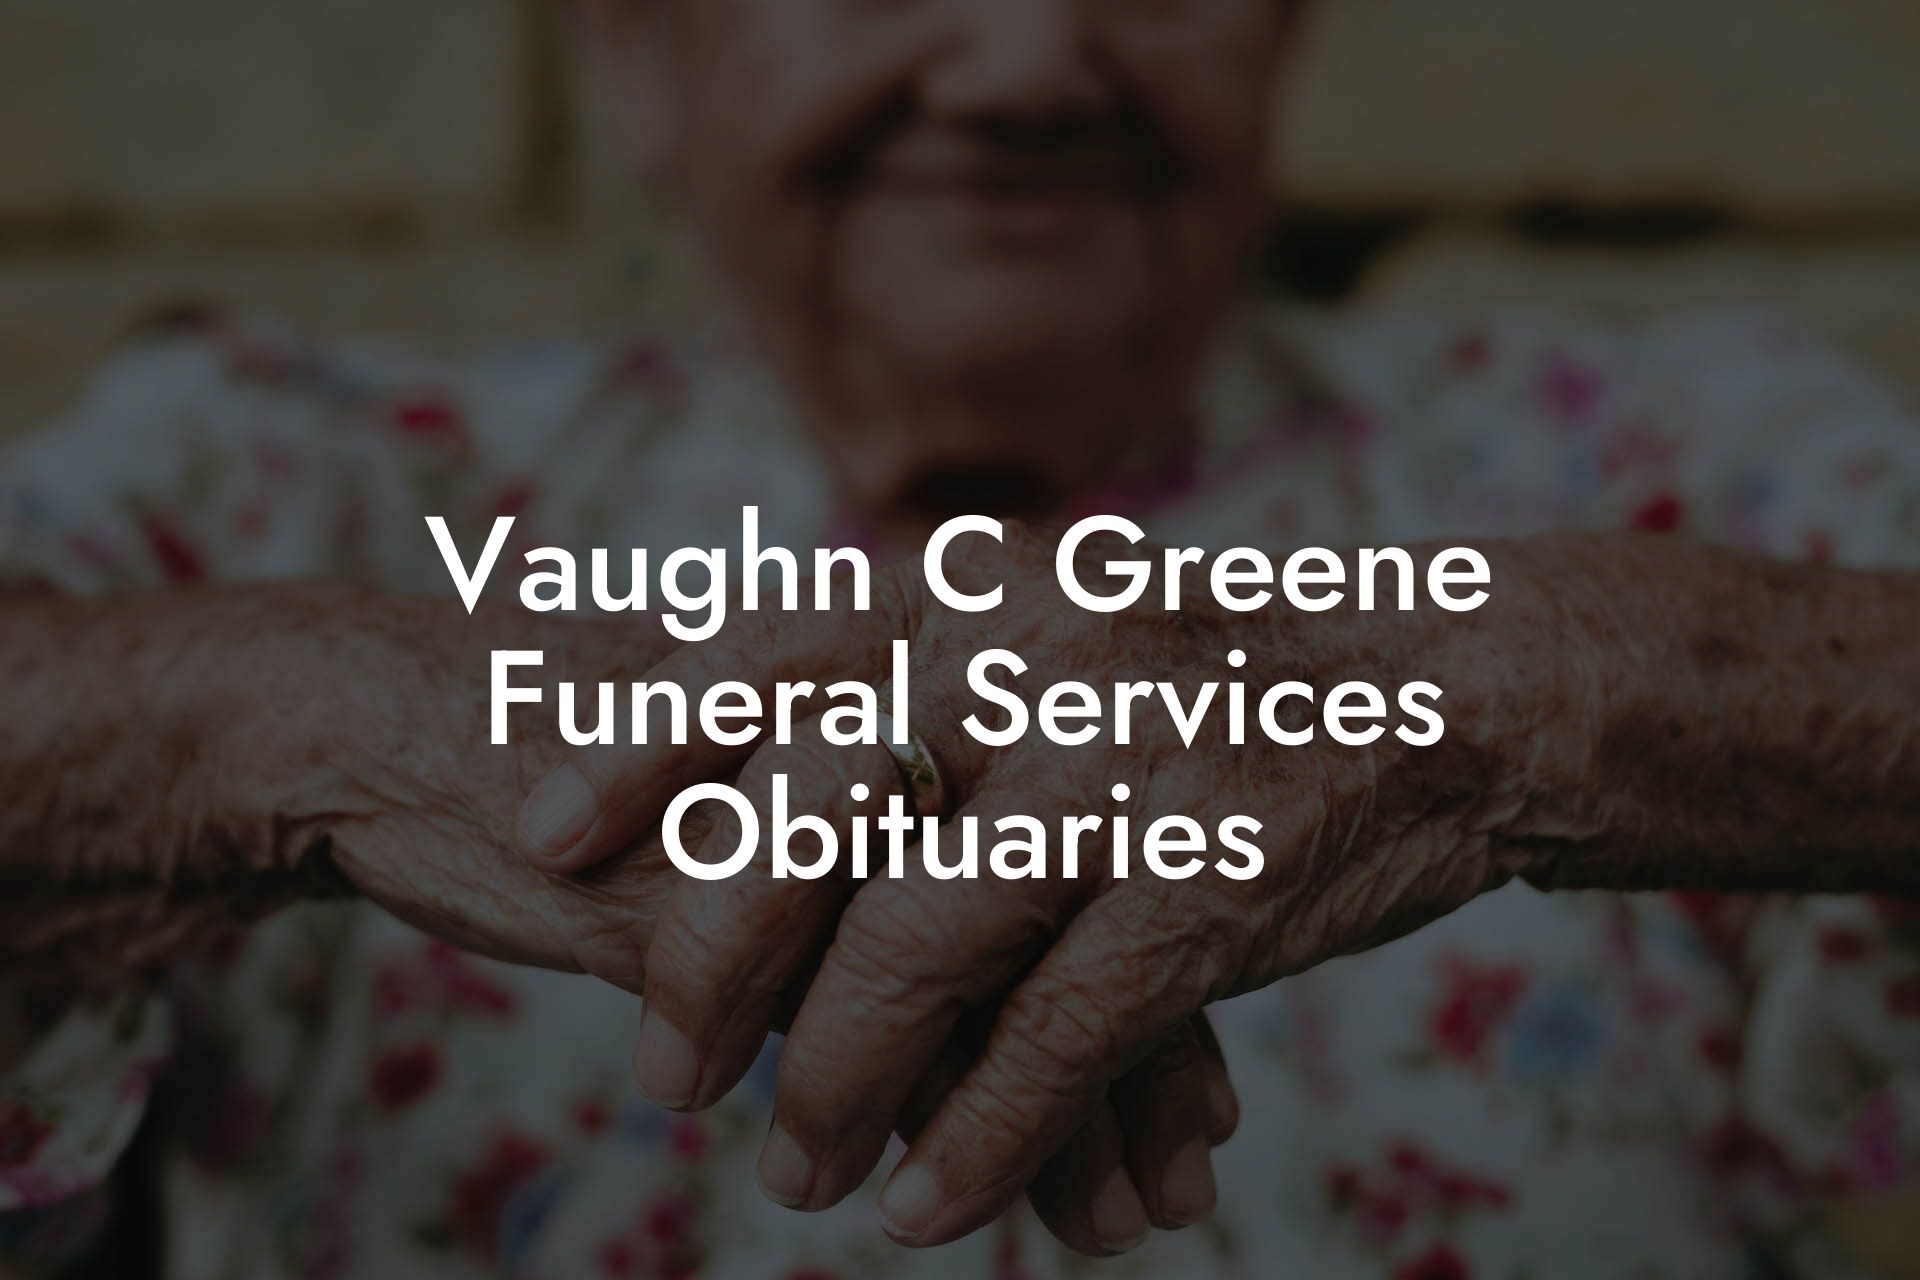 Vaughn C Greene Funeral Services Obituaries